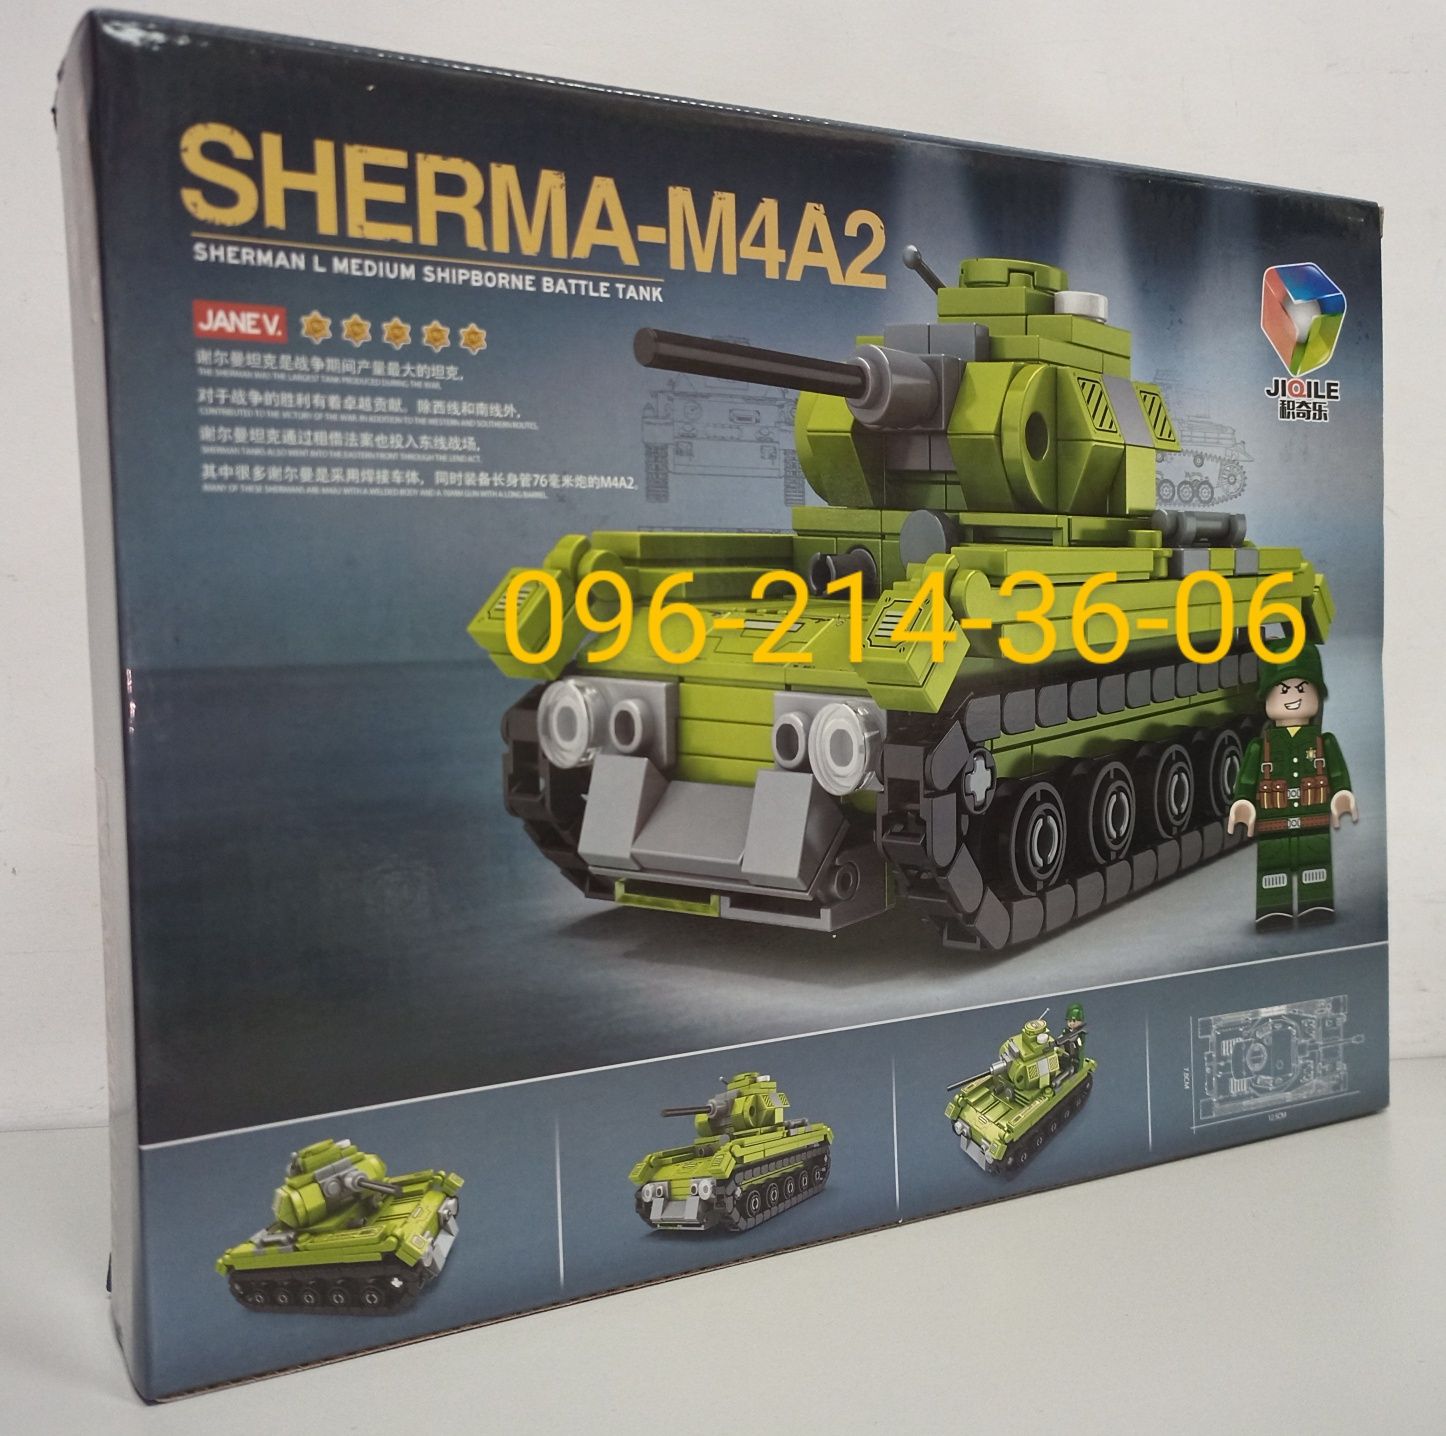 Конструктор Армия 42023 "Танк Шерман Sherman M4", 311 дет.